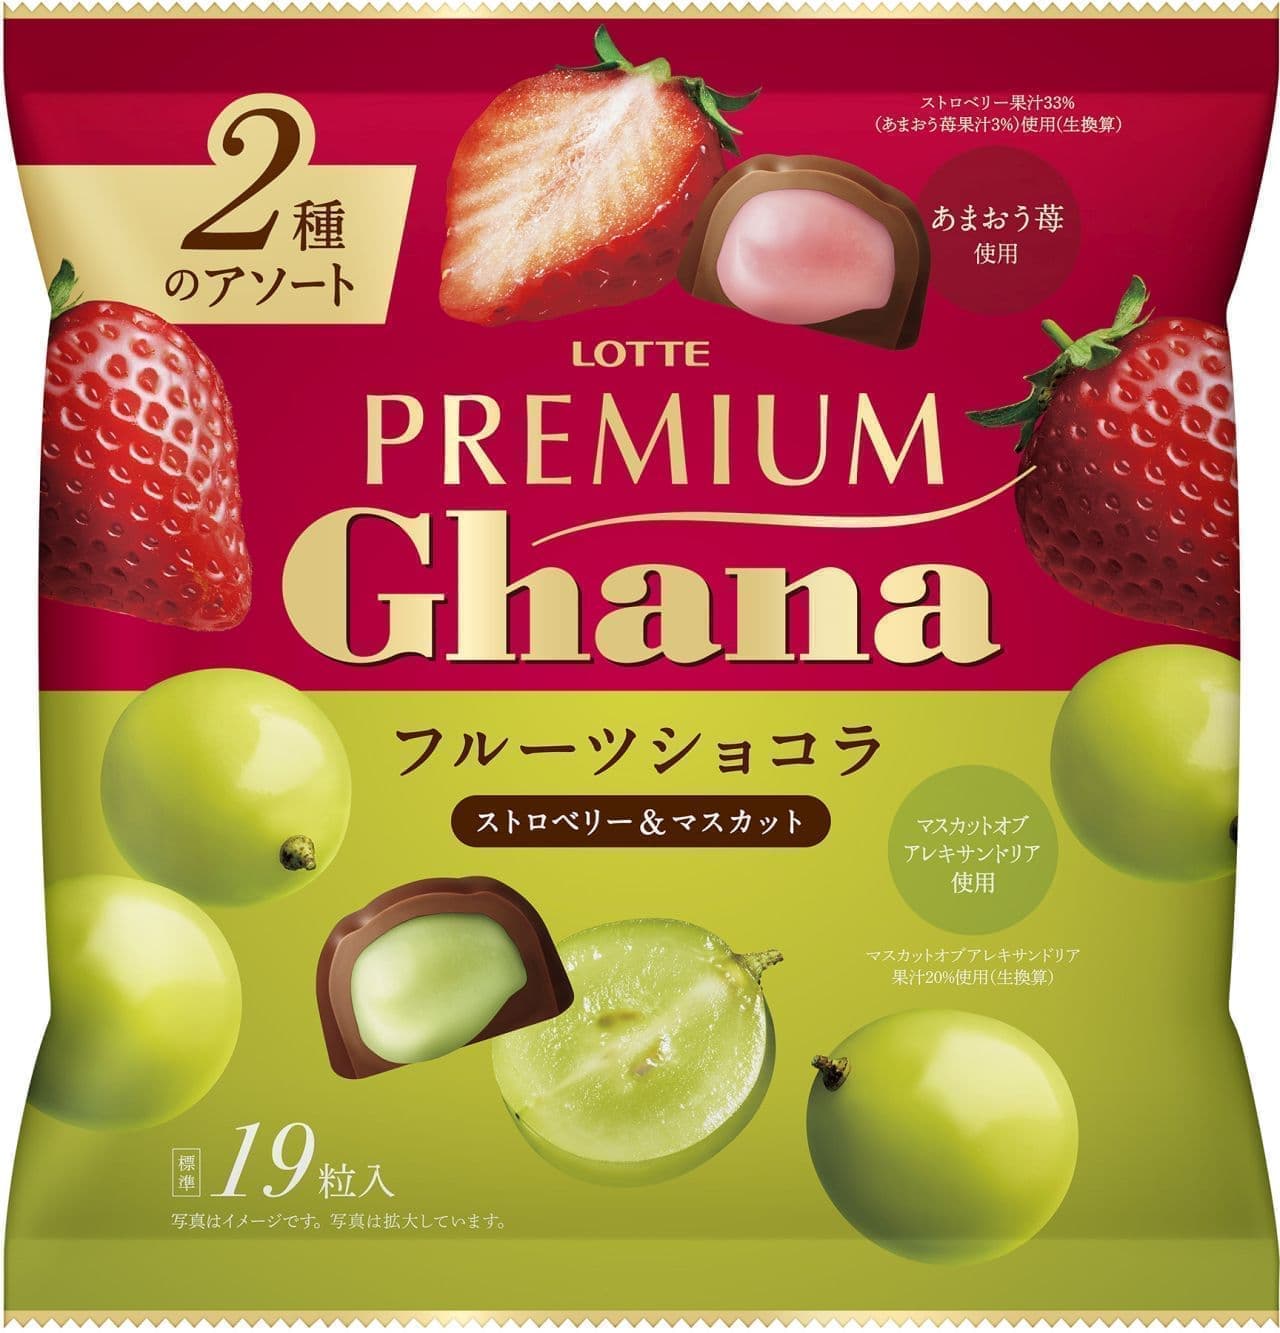 Assorted Pack "Premium Ghana Fruit Chocolat Assorted Pack"